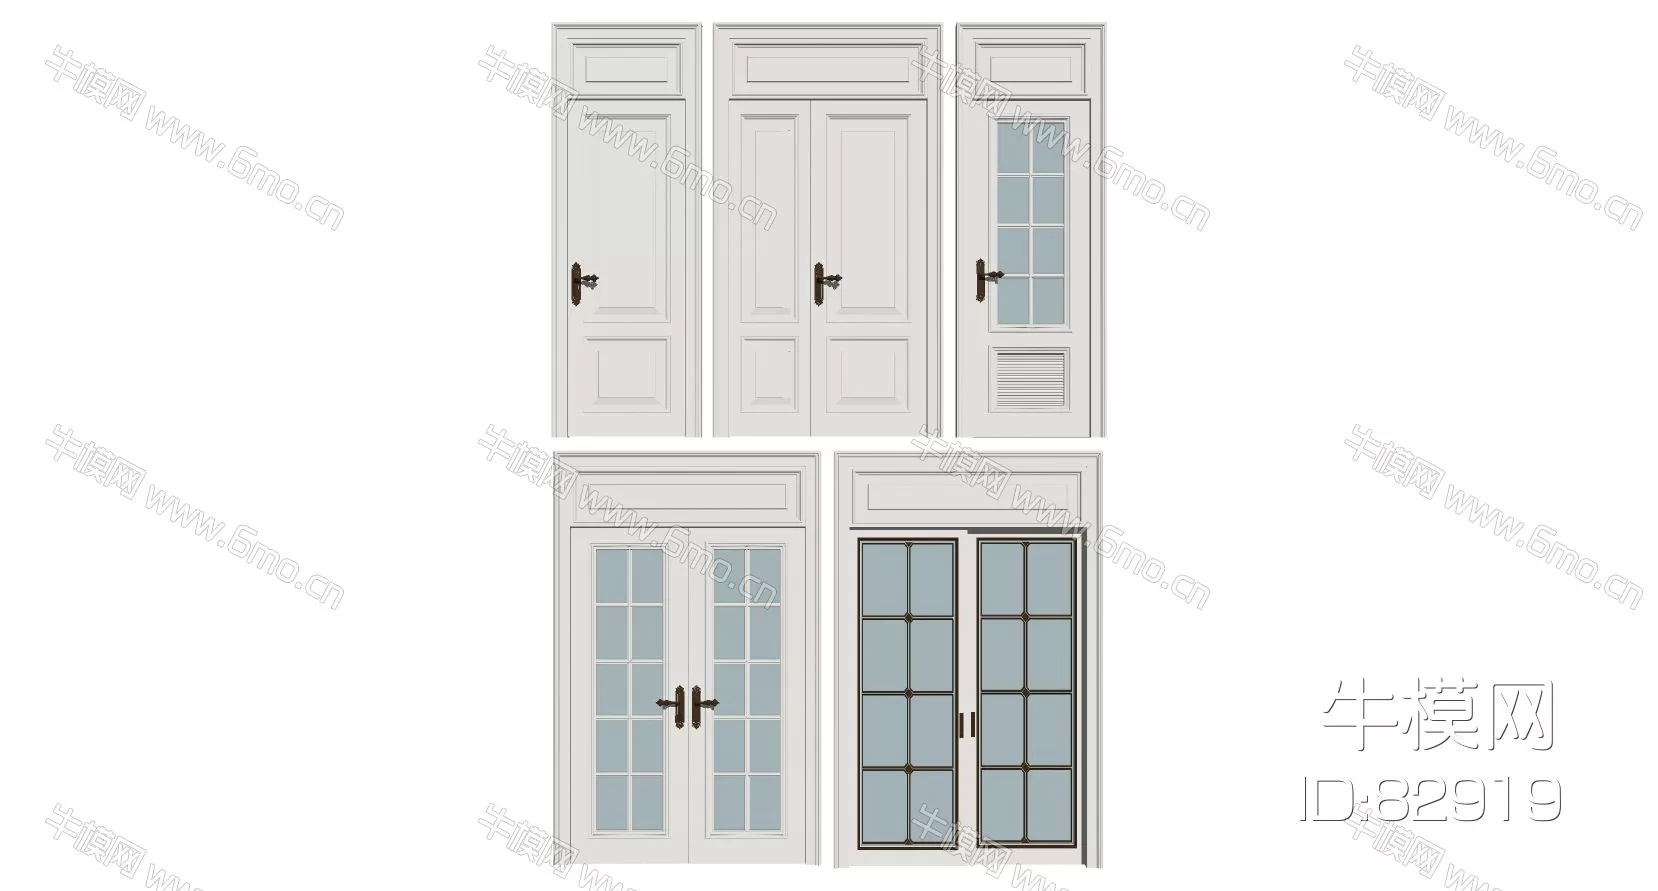 MODERN DOOR AND WINDOWS - SKETCHUP 3D MODEL - ENSCAPE - 82919